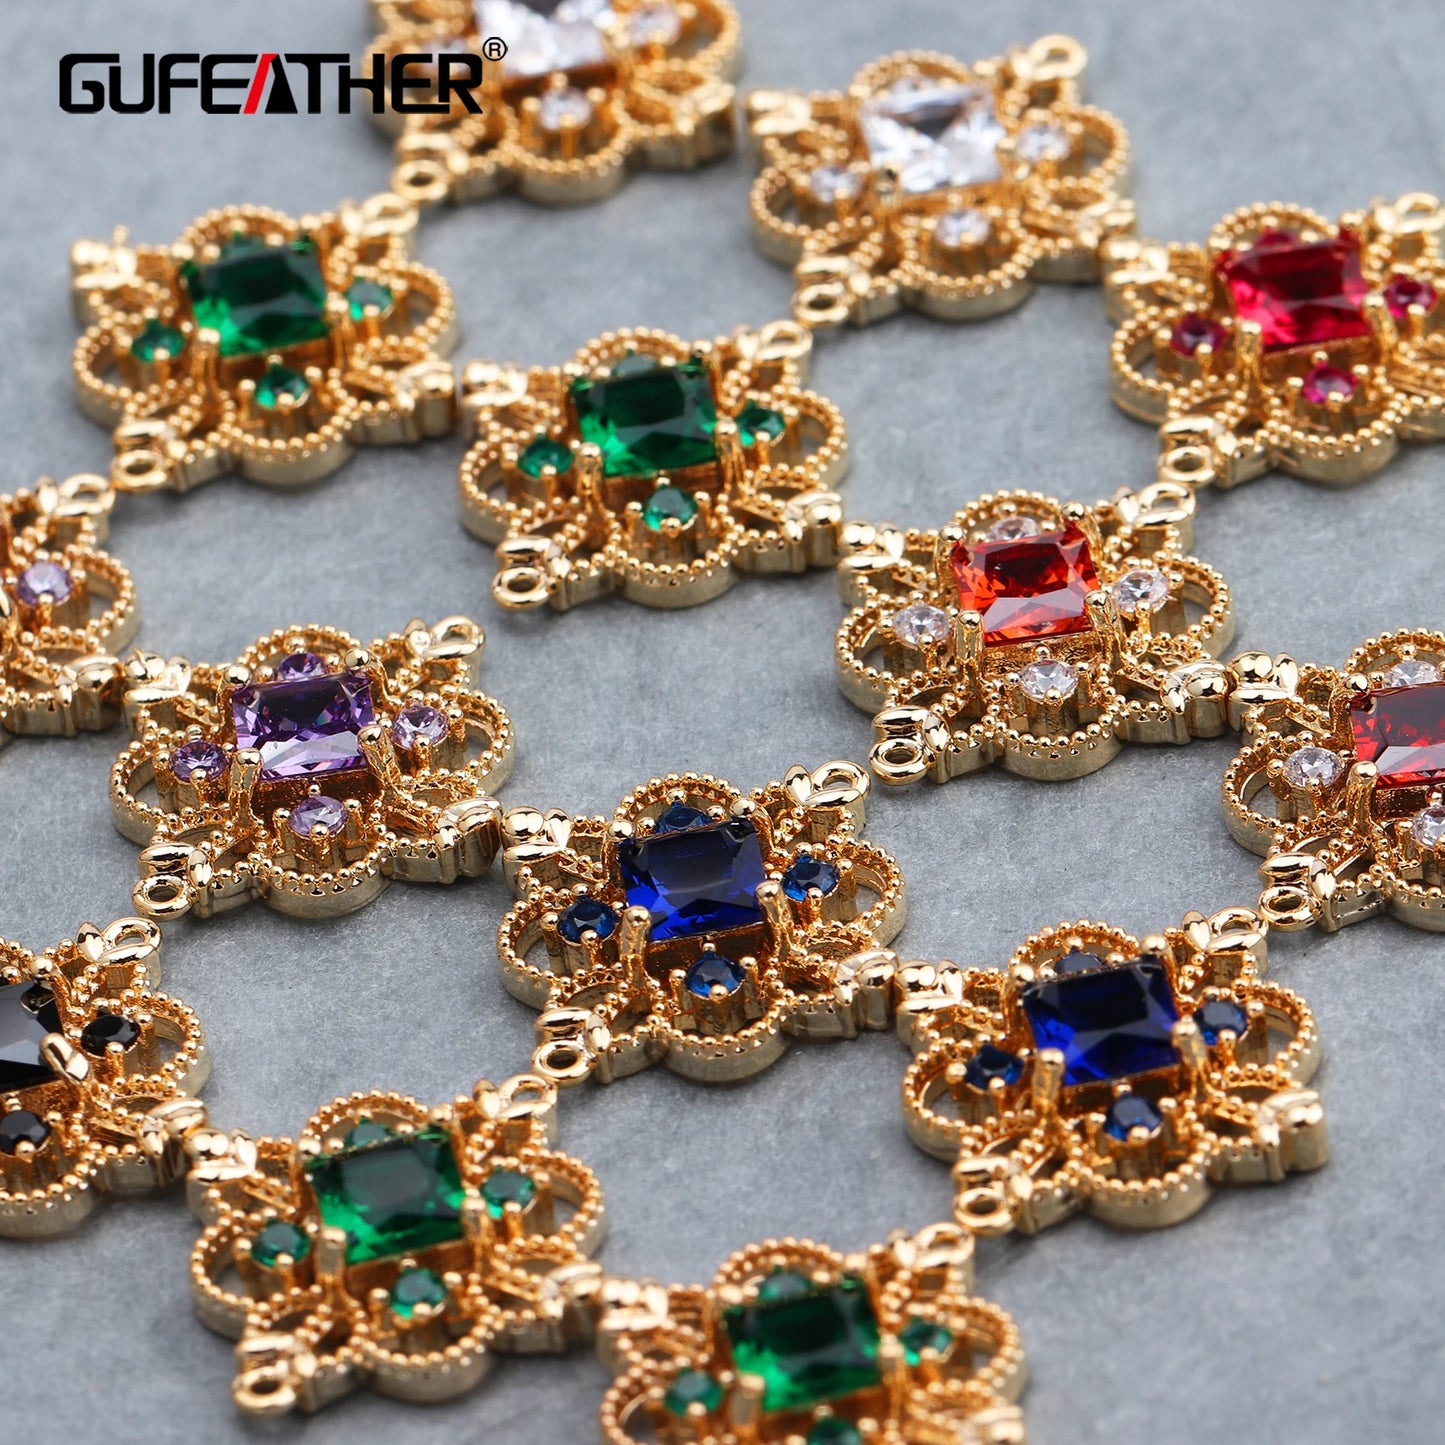 GUFEATHER M588,jewelry accessories,18k gold plated,zircon pendants,pass REACH,nickel free,jewelry making,diy earrings,6pcs/lot